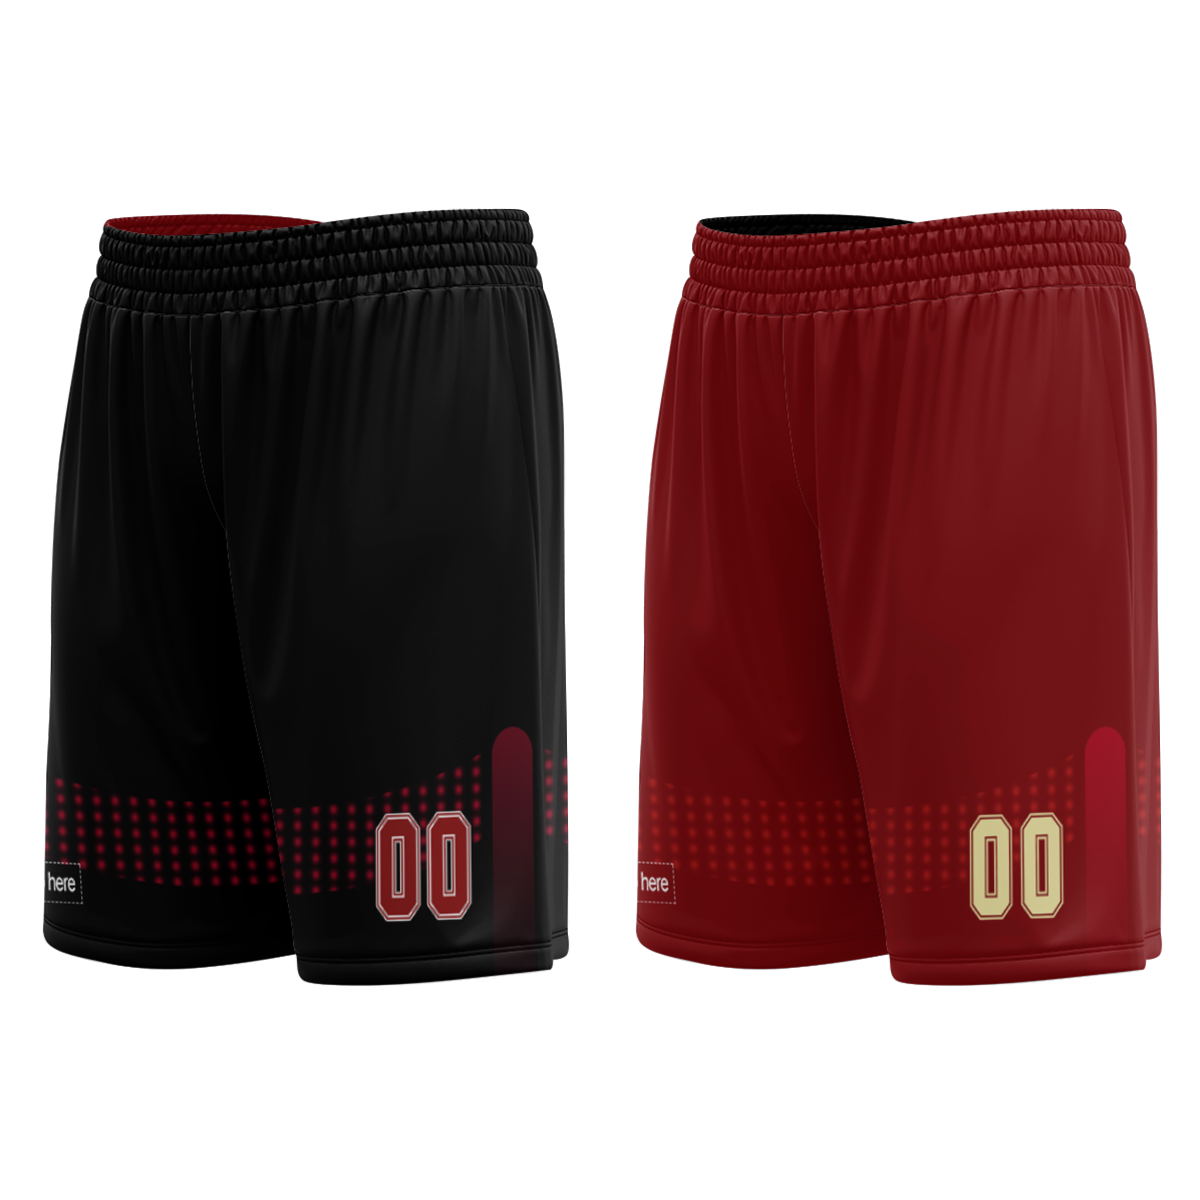 multiple-design-reversible-basketball-jersey-team-set-your-own-print-men-kids-youth-suit-custom-logo-basketball-uniform-jersey-at-cj-pod-8